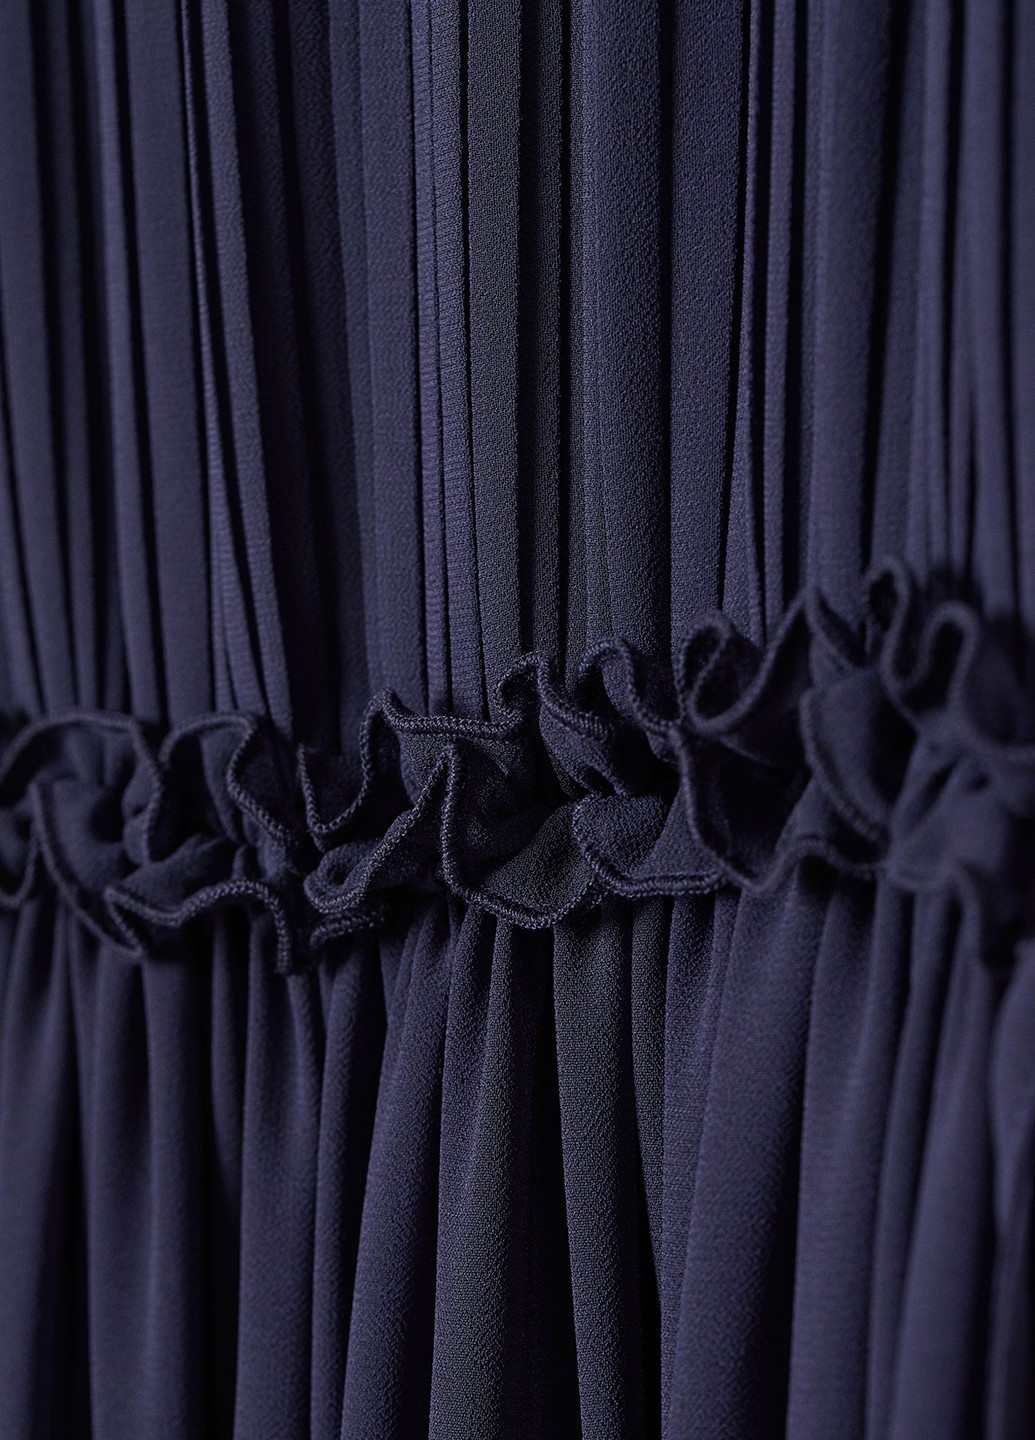 Темно-синее вечернее платье H&M